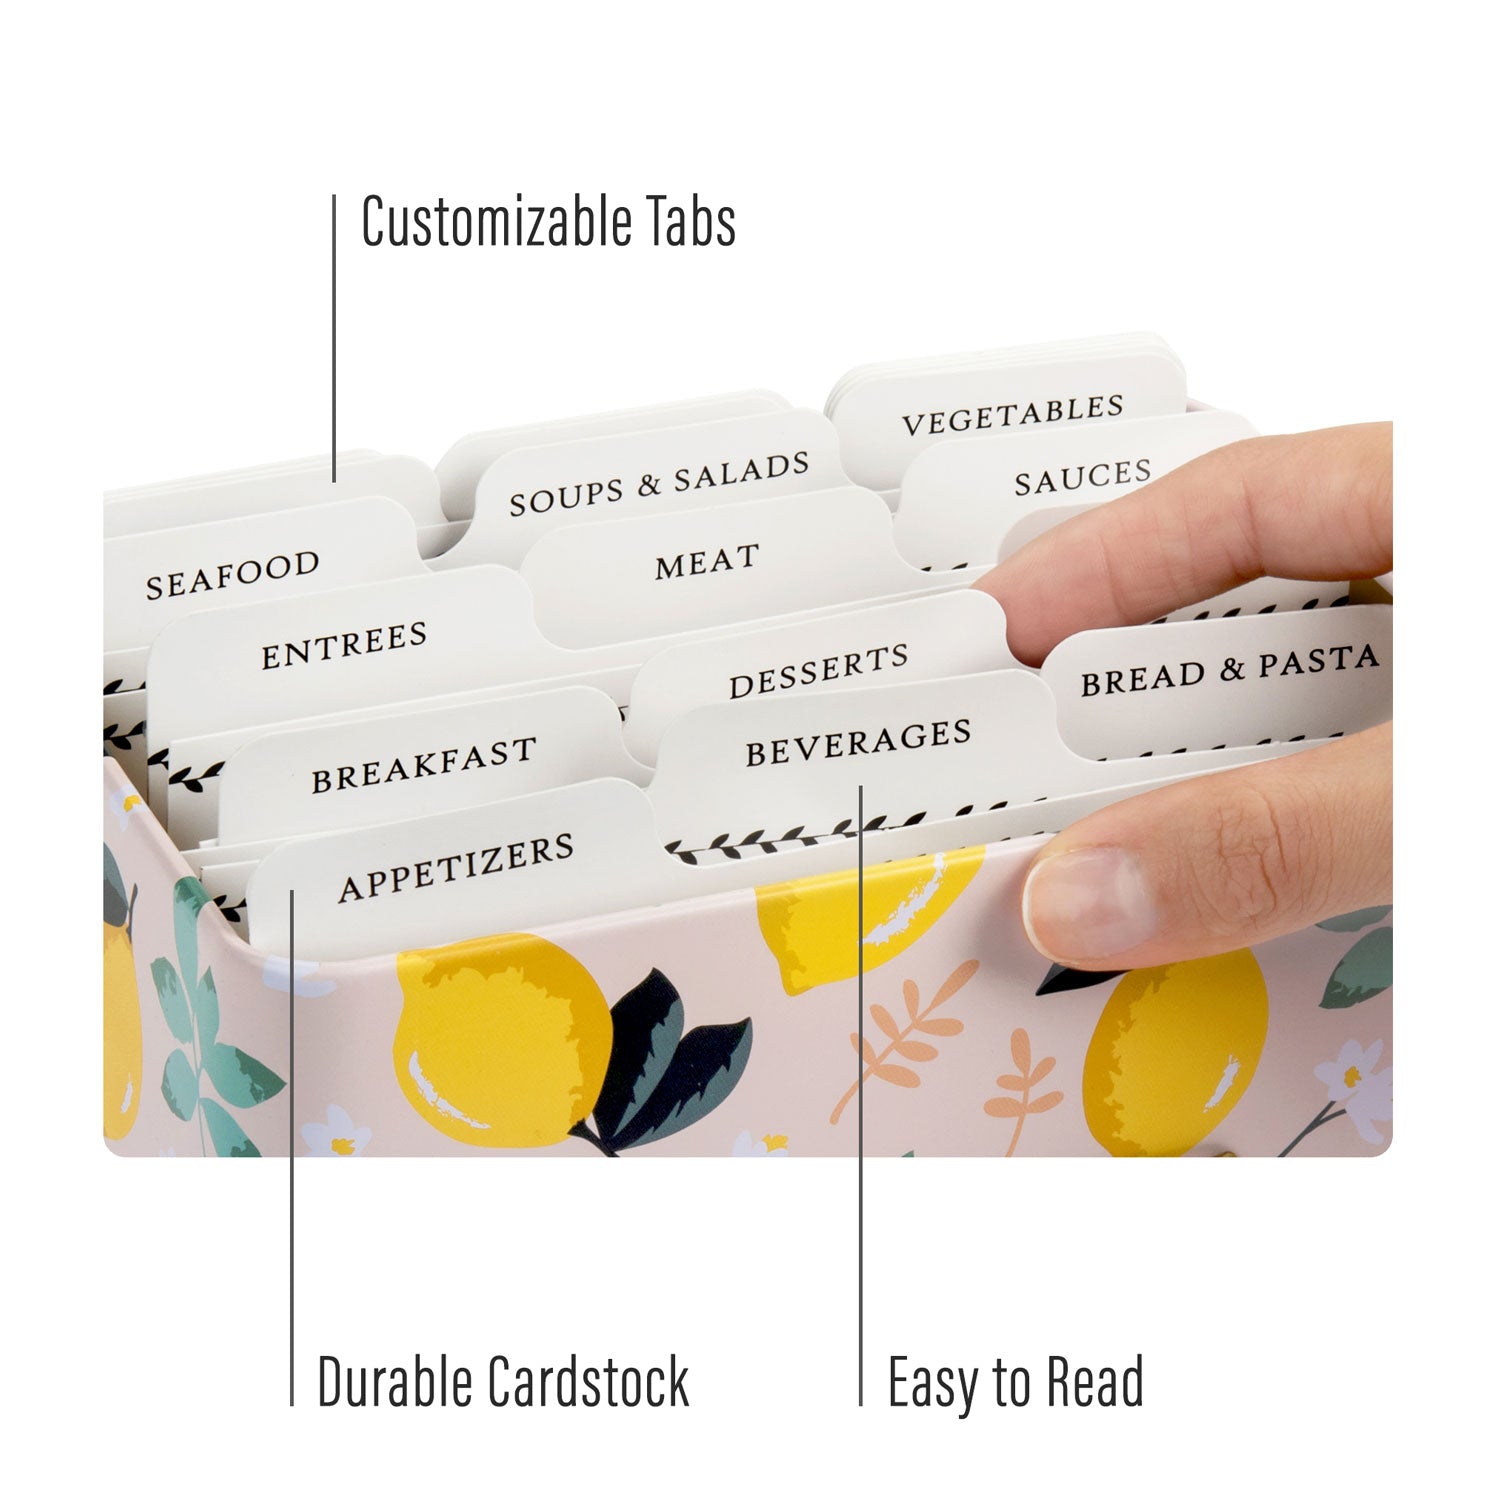  Jot & Mark Greeting Card Organizer Box Set  Decorative Recipe  Tin Box, Tab Dividers, Matching Greeting Cards and Envelopes (Dots) :  Office Products